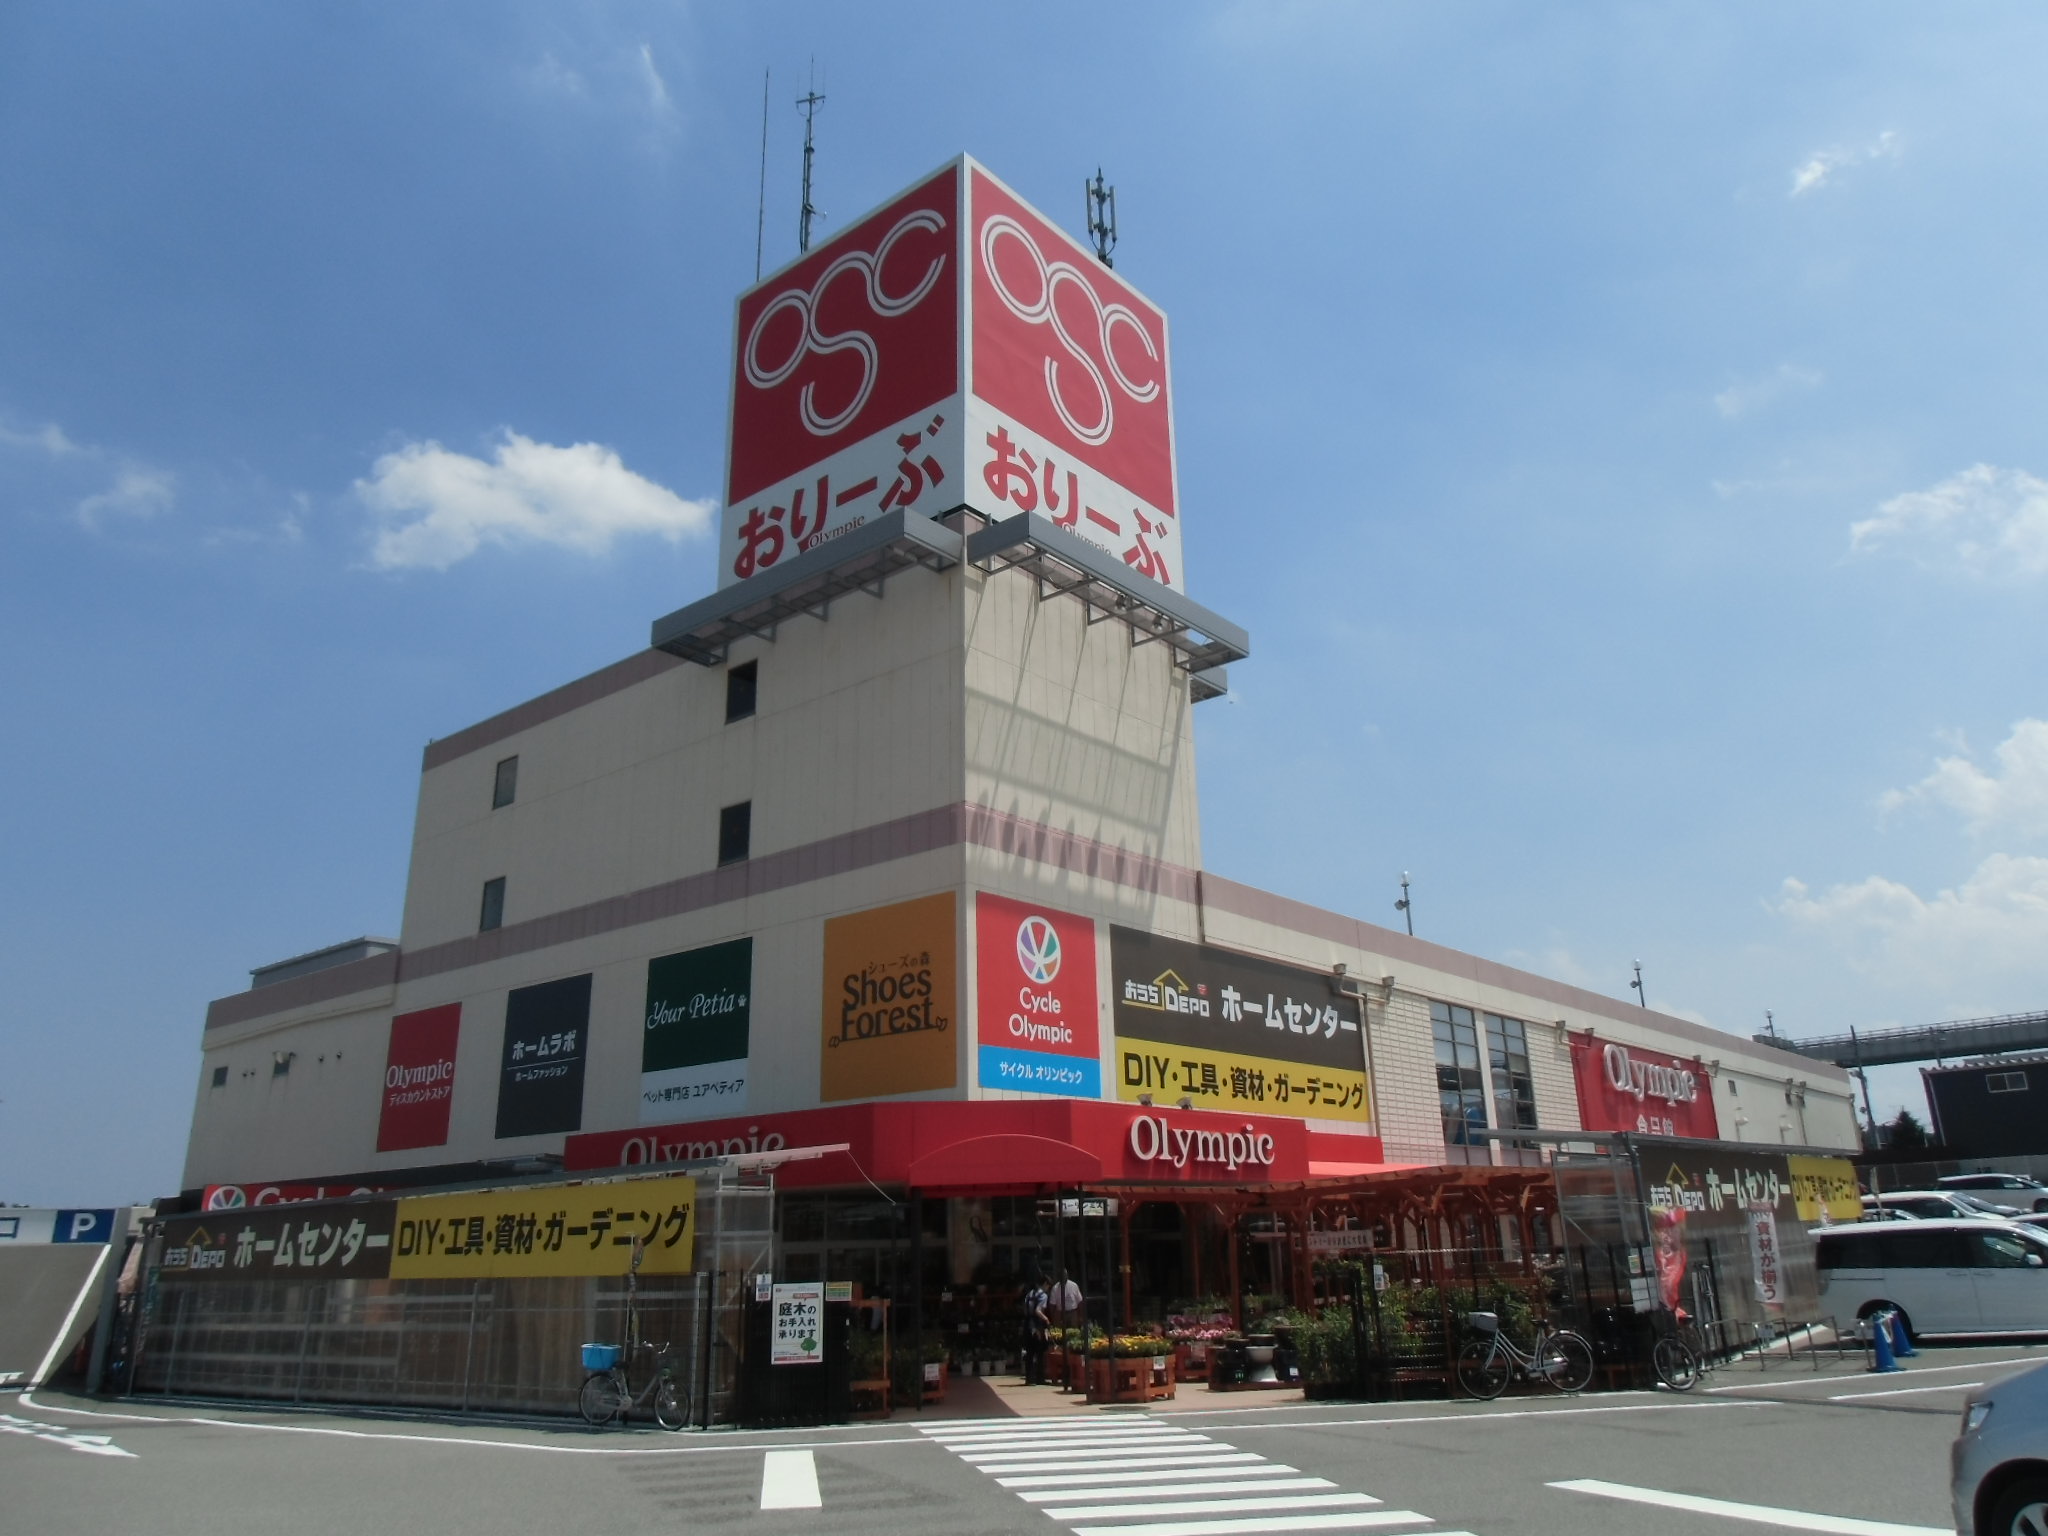 Supermarket. Olympic hypermarket Chiba Sakuragi store up to (super) 1111m